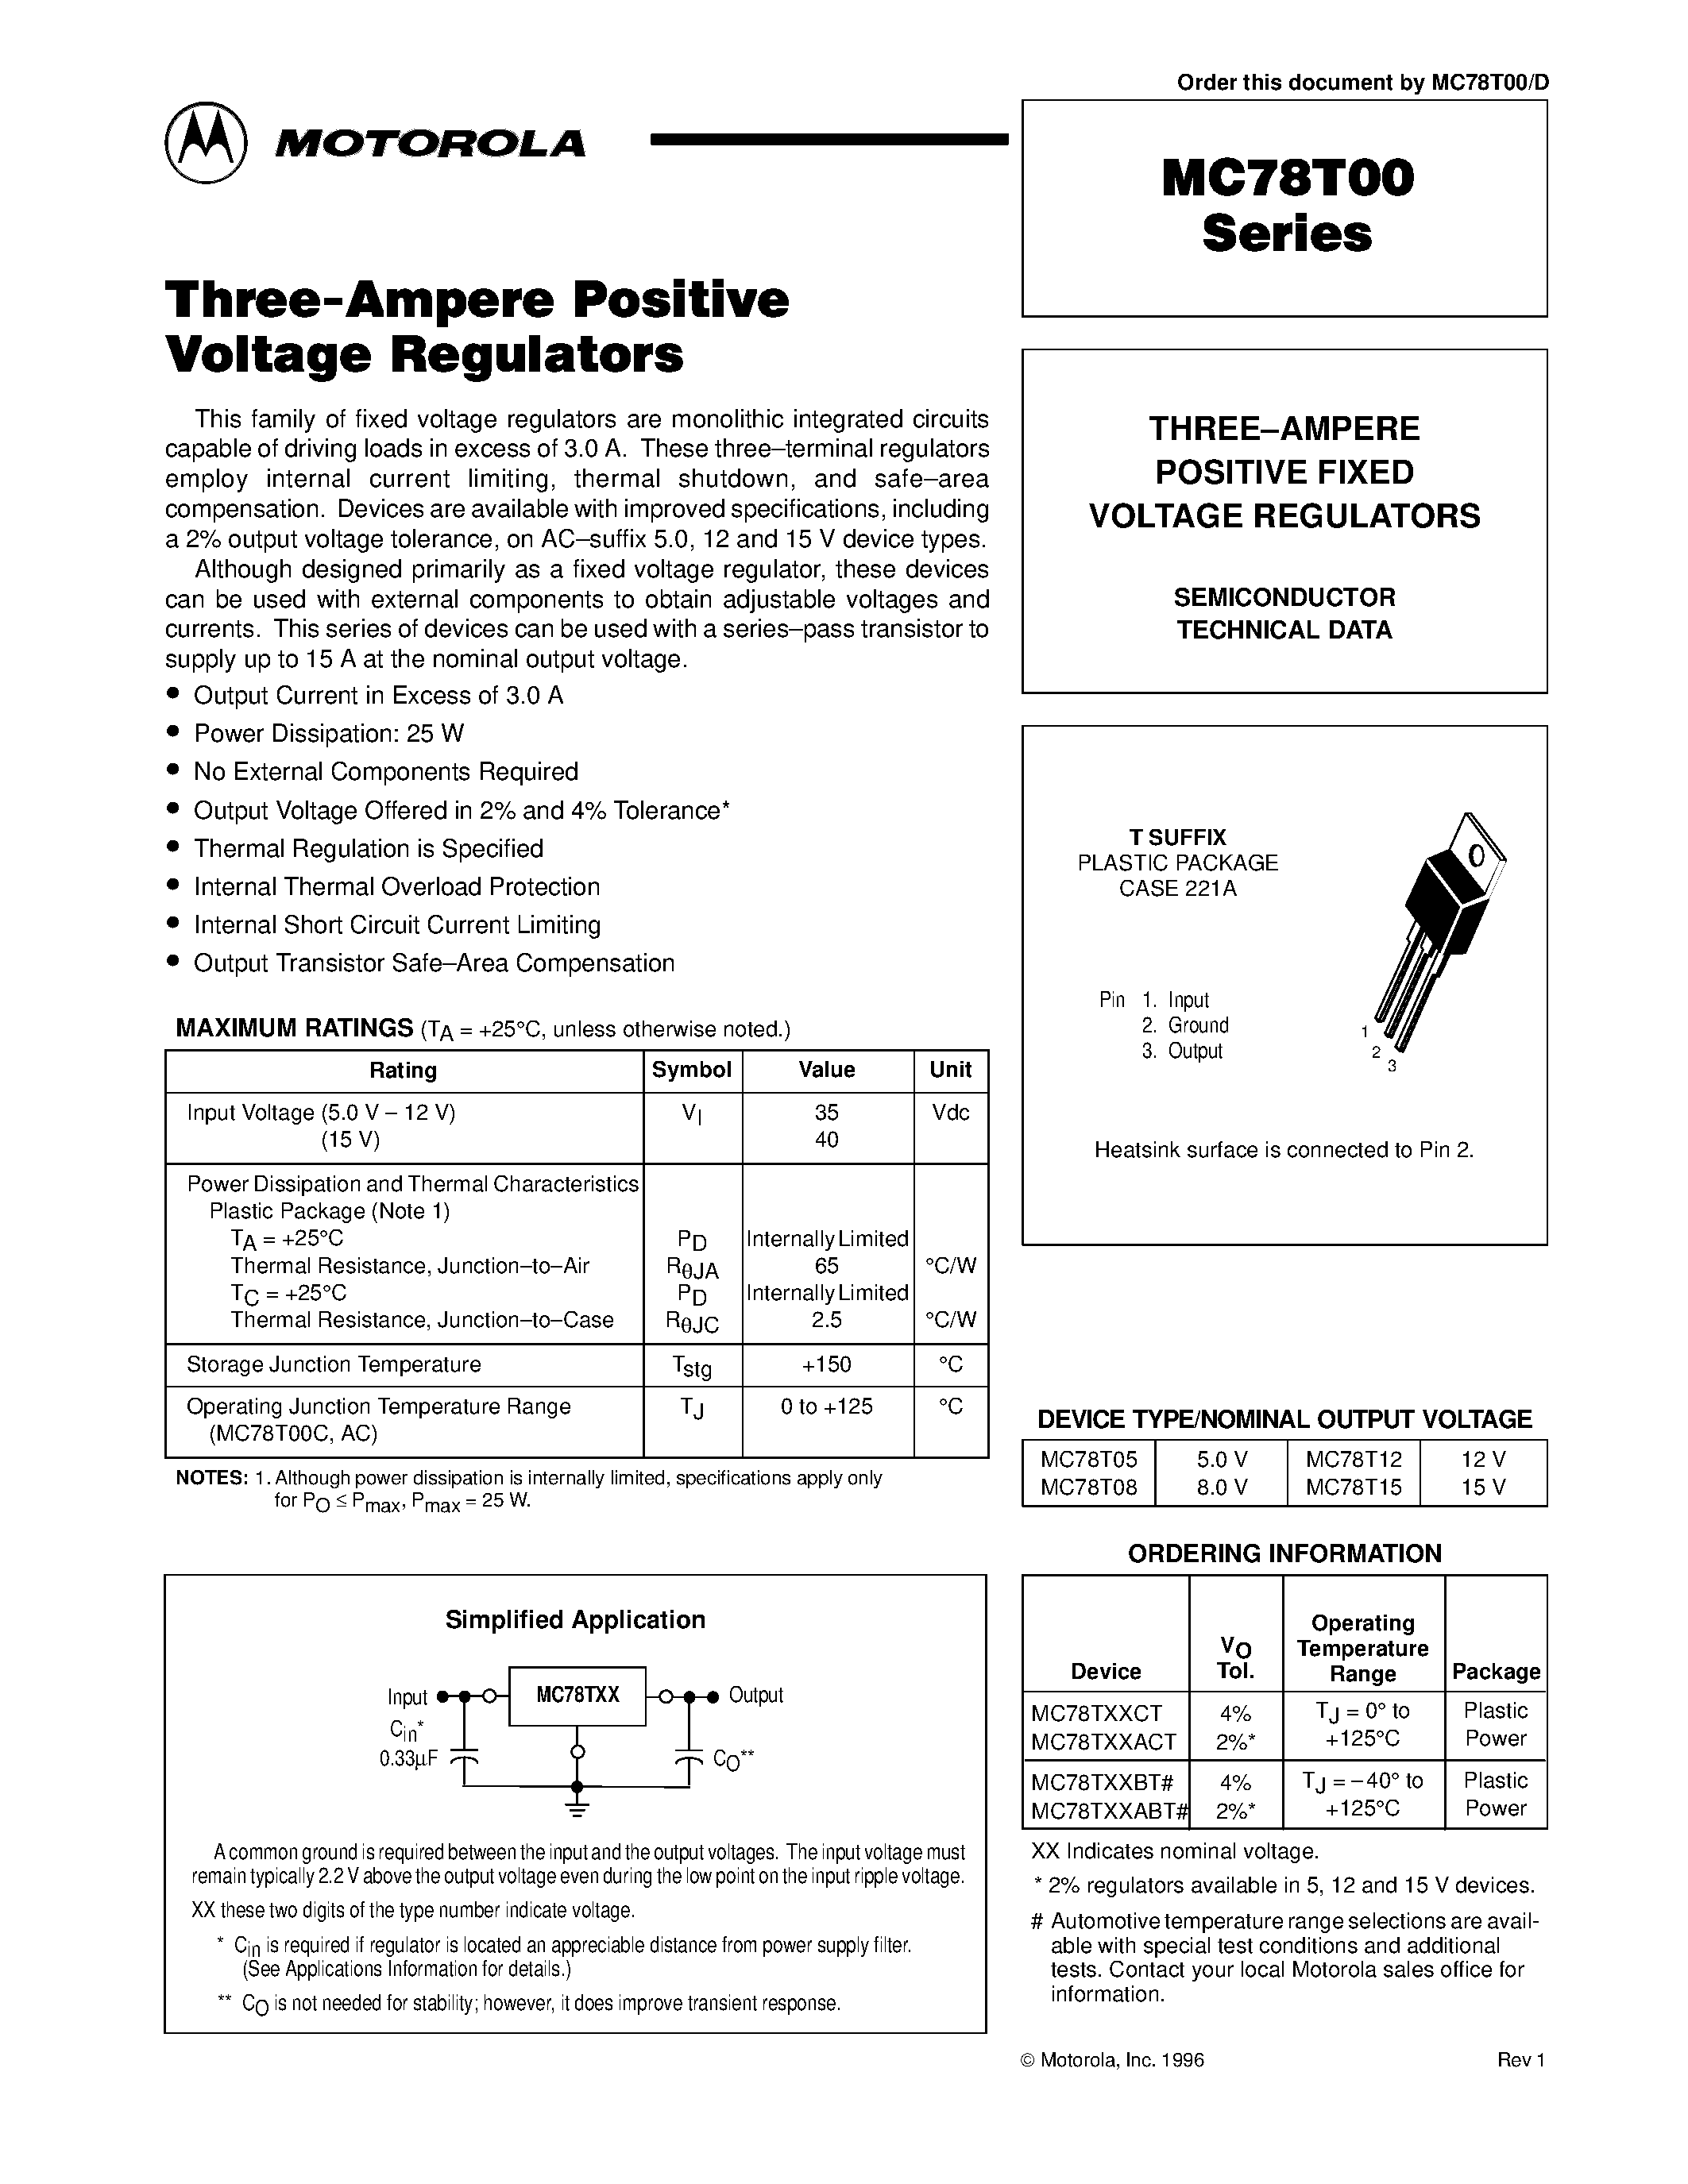 Datasheet MC78T12BT - THREE-AMPERE POSITIVE FIXED VOLTAGE REGULATORS page 1